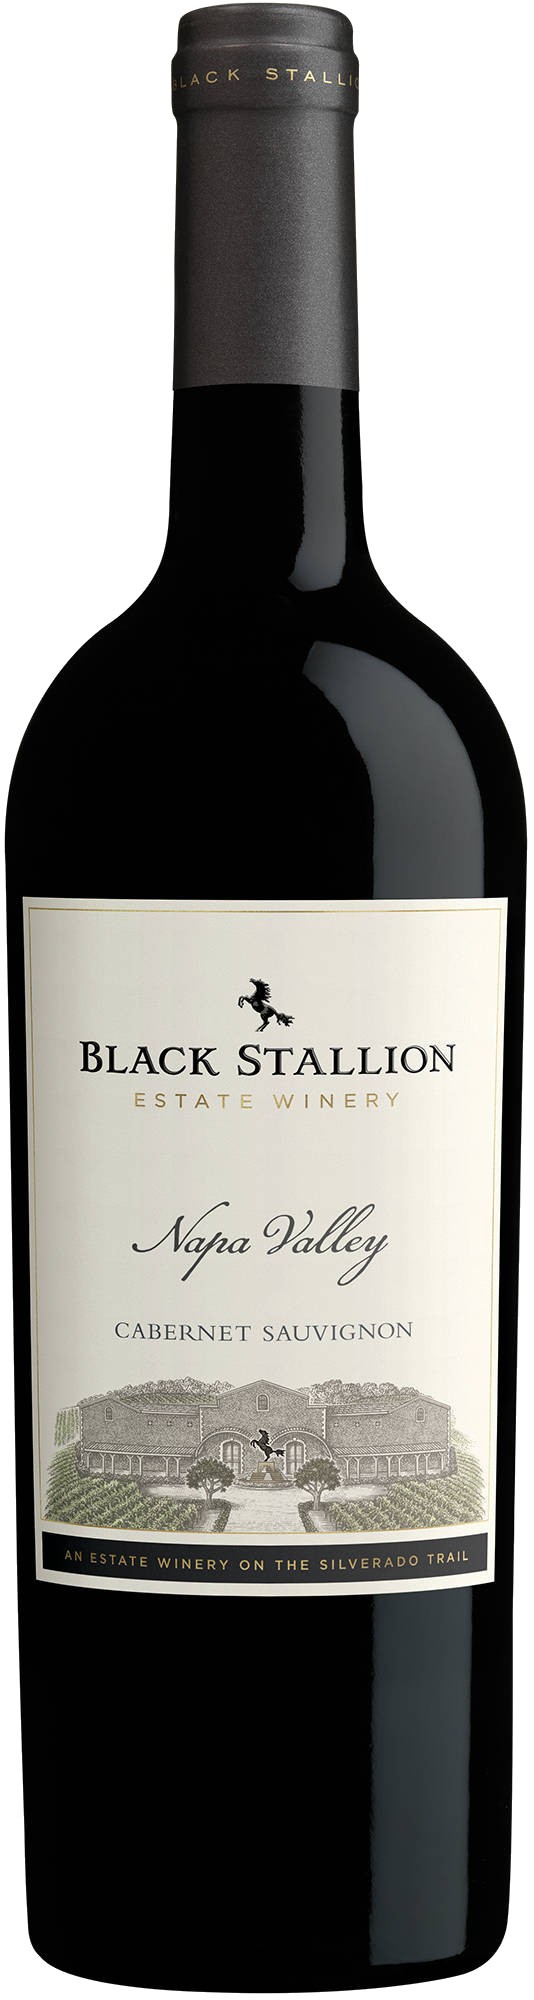 images/wine/Red Wine/Black Stallion Cabernet Sauvignon .jpg